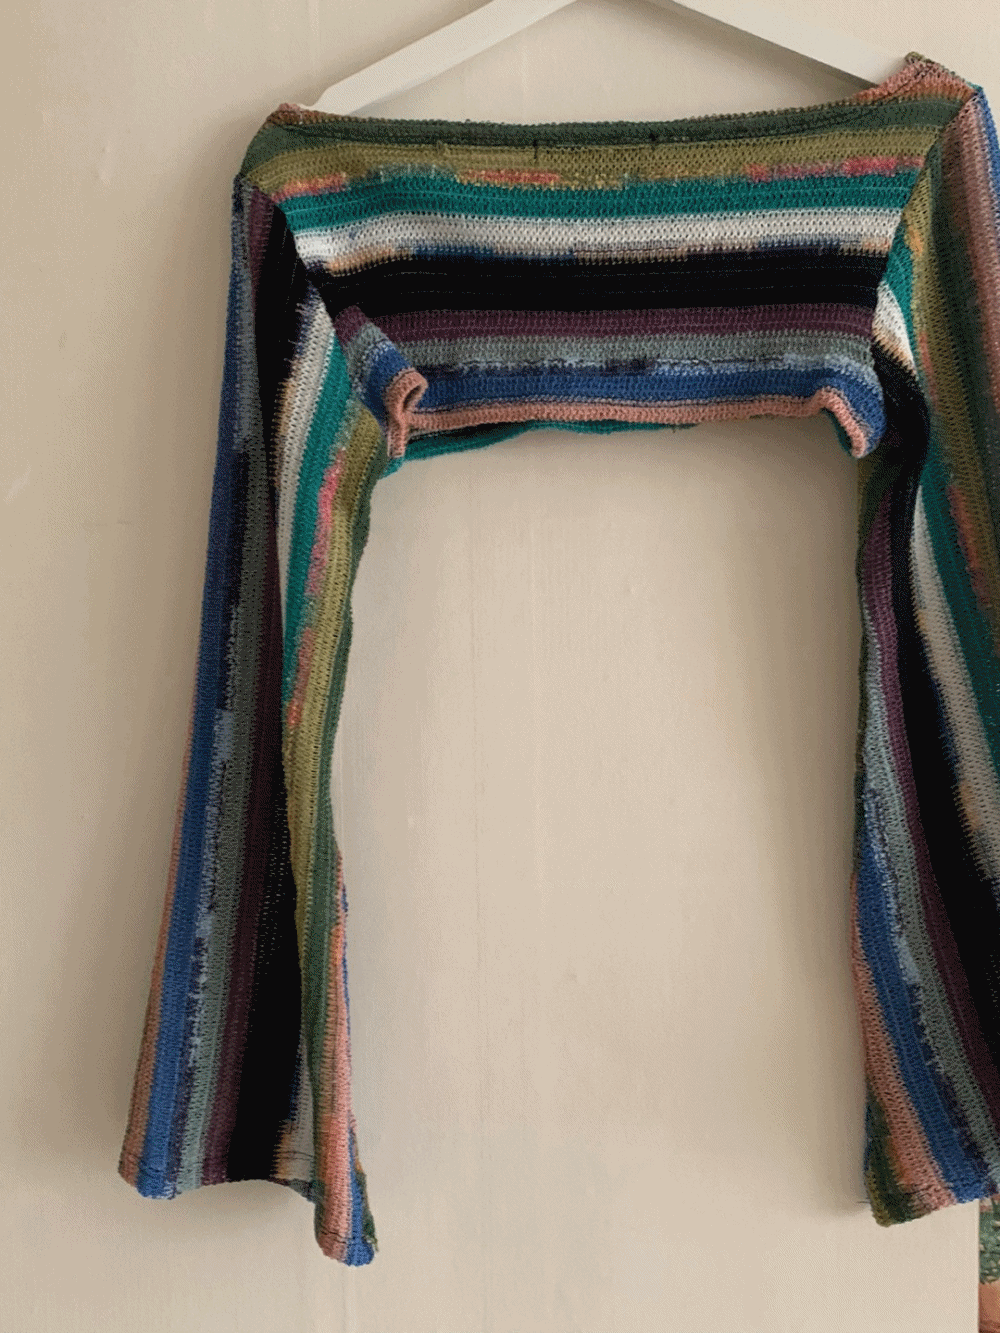 [Top] Mermaid stripe bolero knit / one color